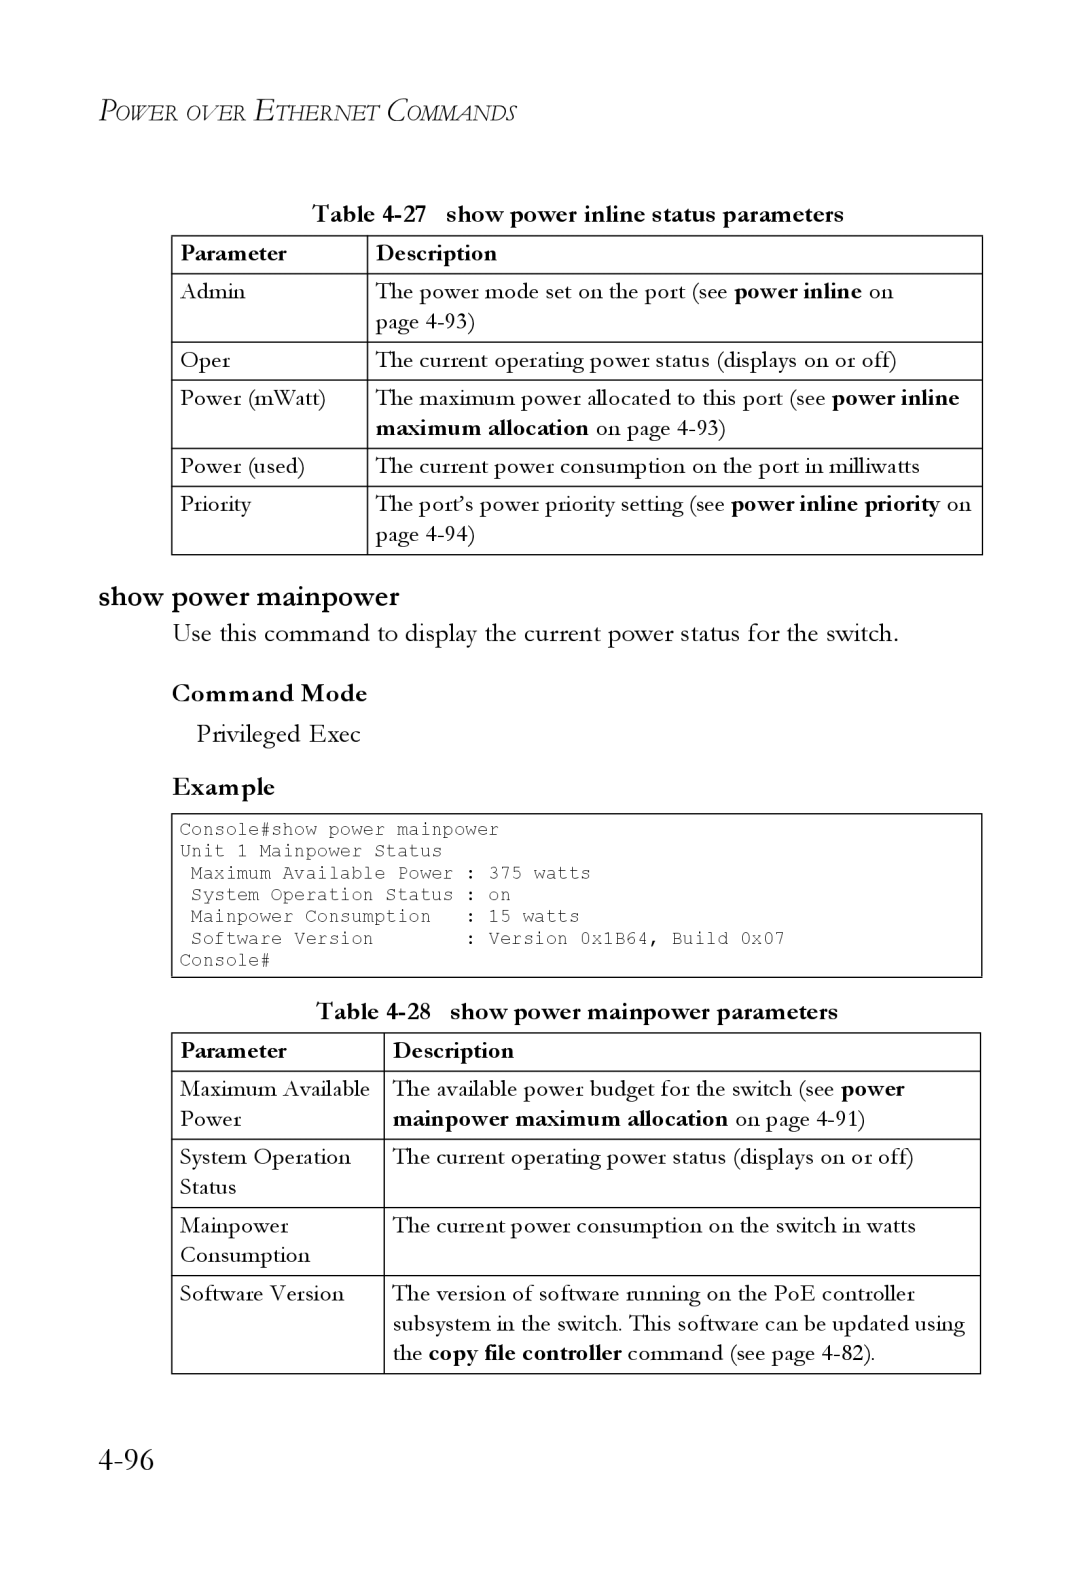 SMC Networks SMC6824M manual Show power mainpower, show power inline status parameters, show power mainpower parameters 